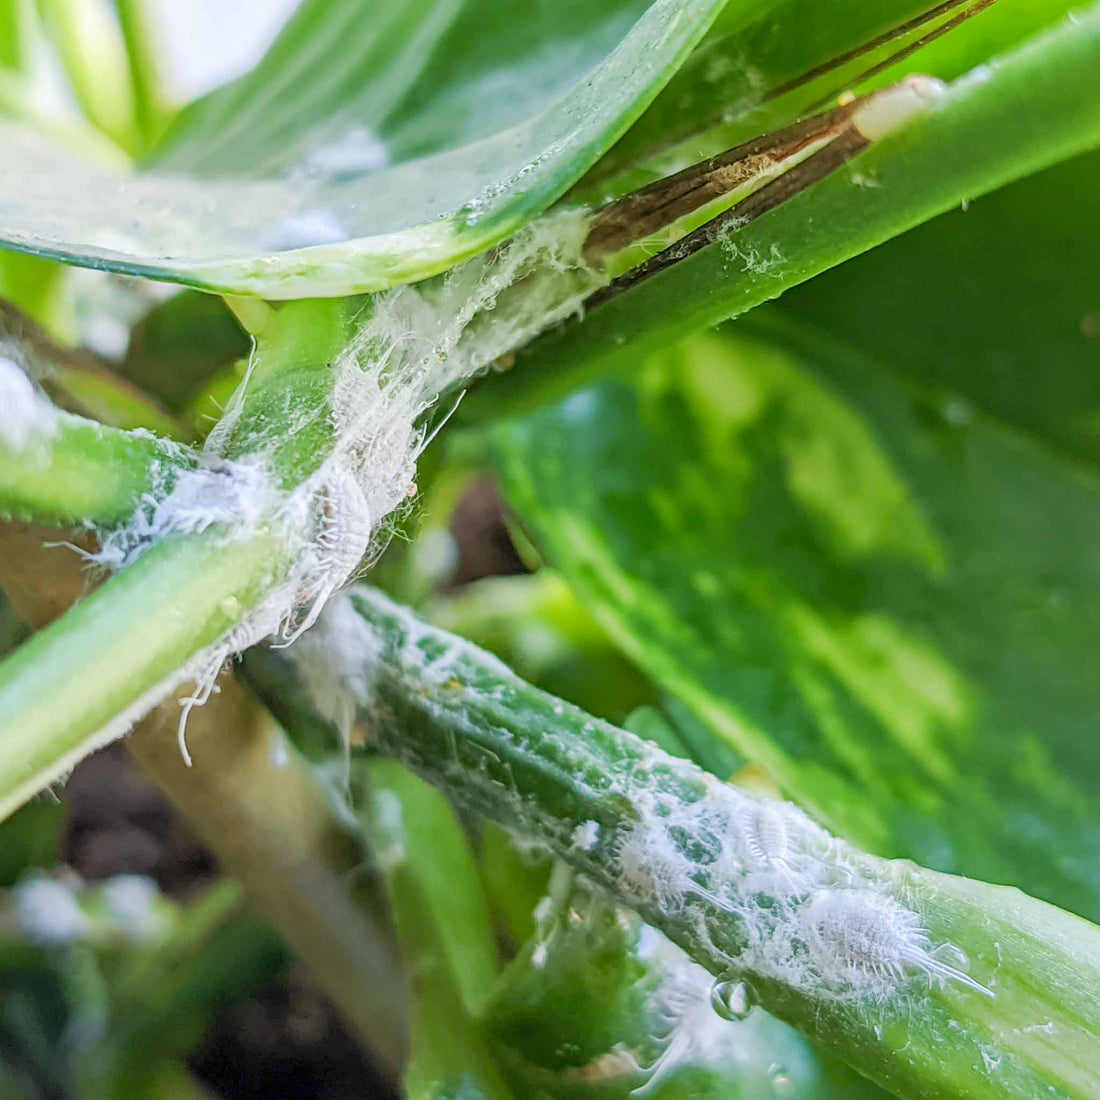 Indoor plant pests: How to get rid of bugs in indoor plants